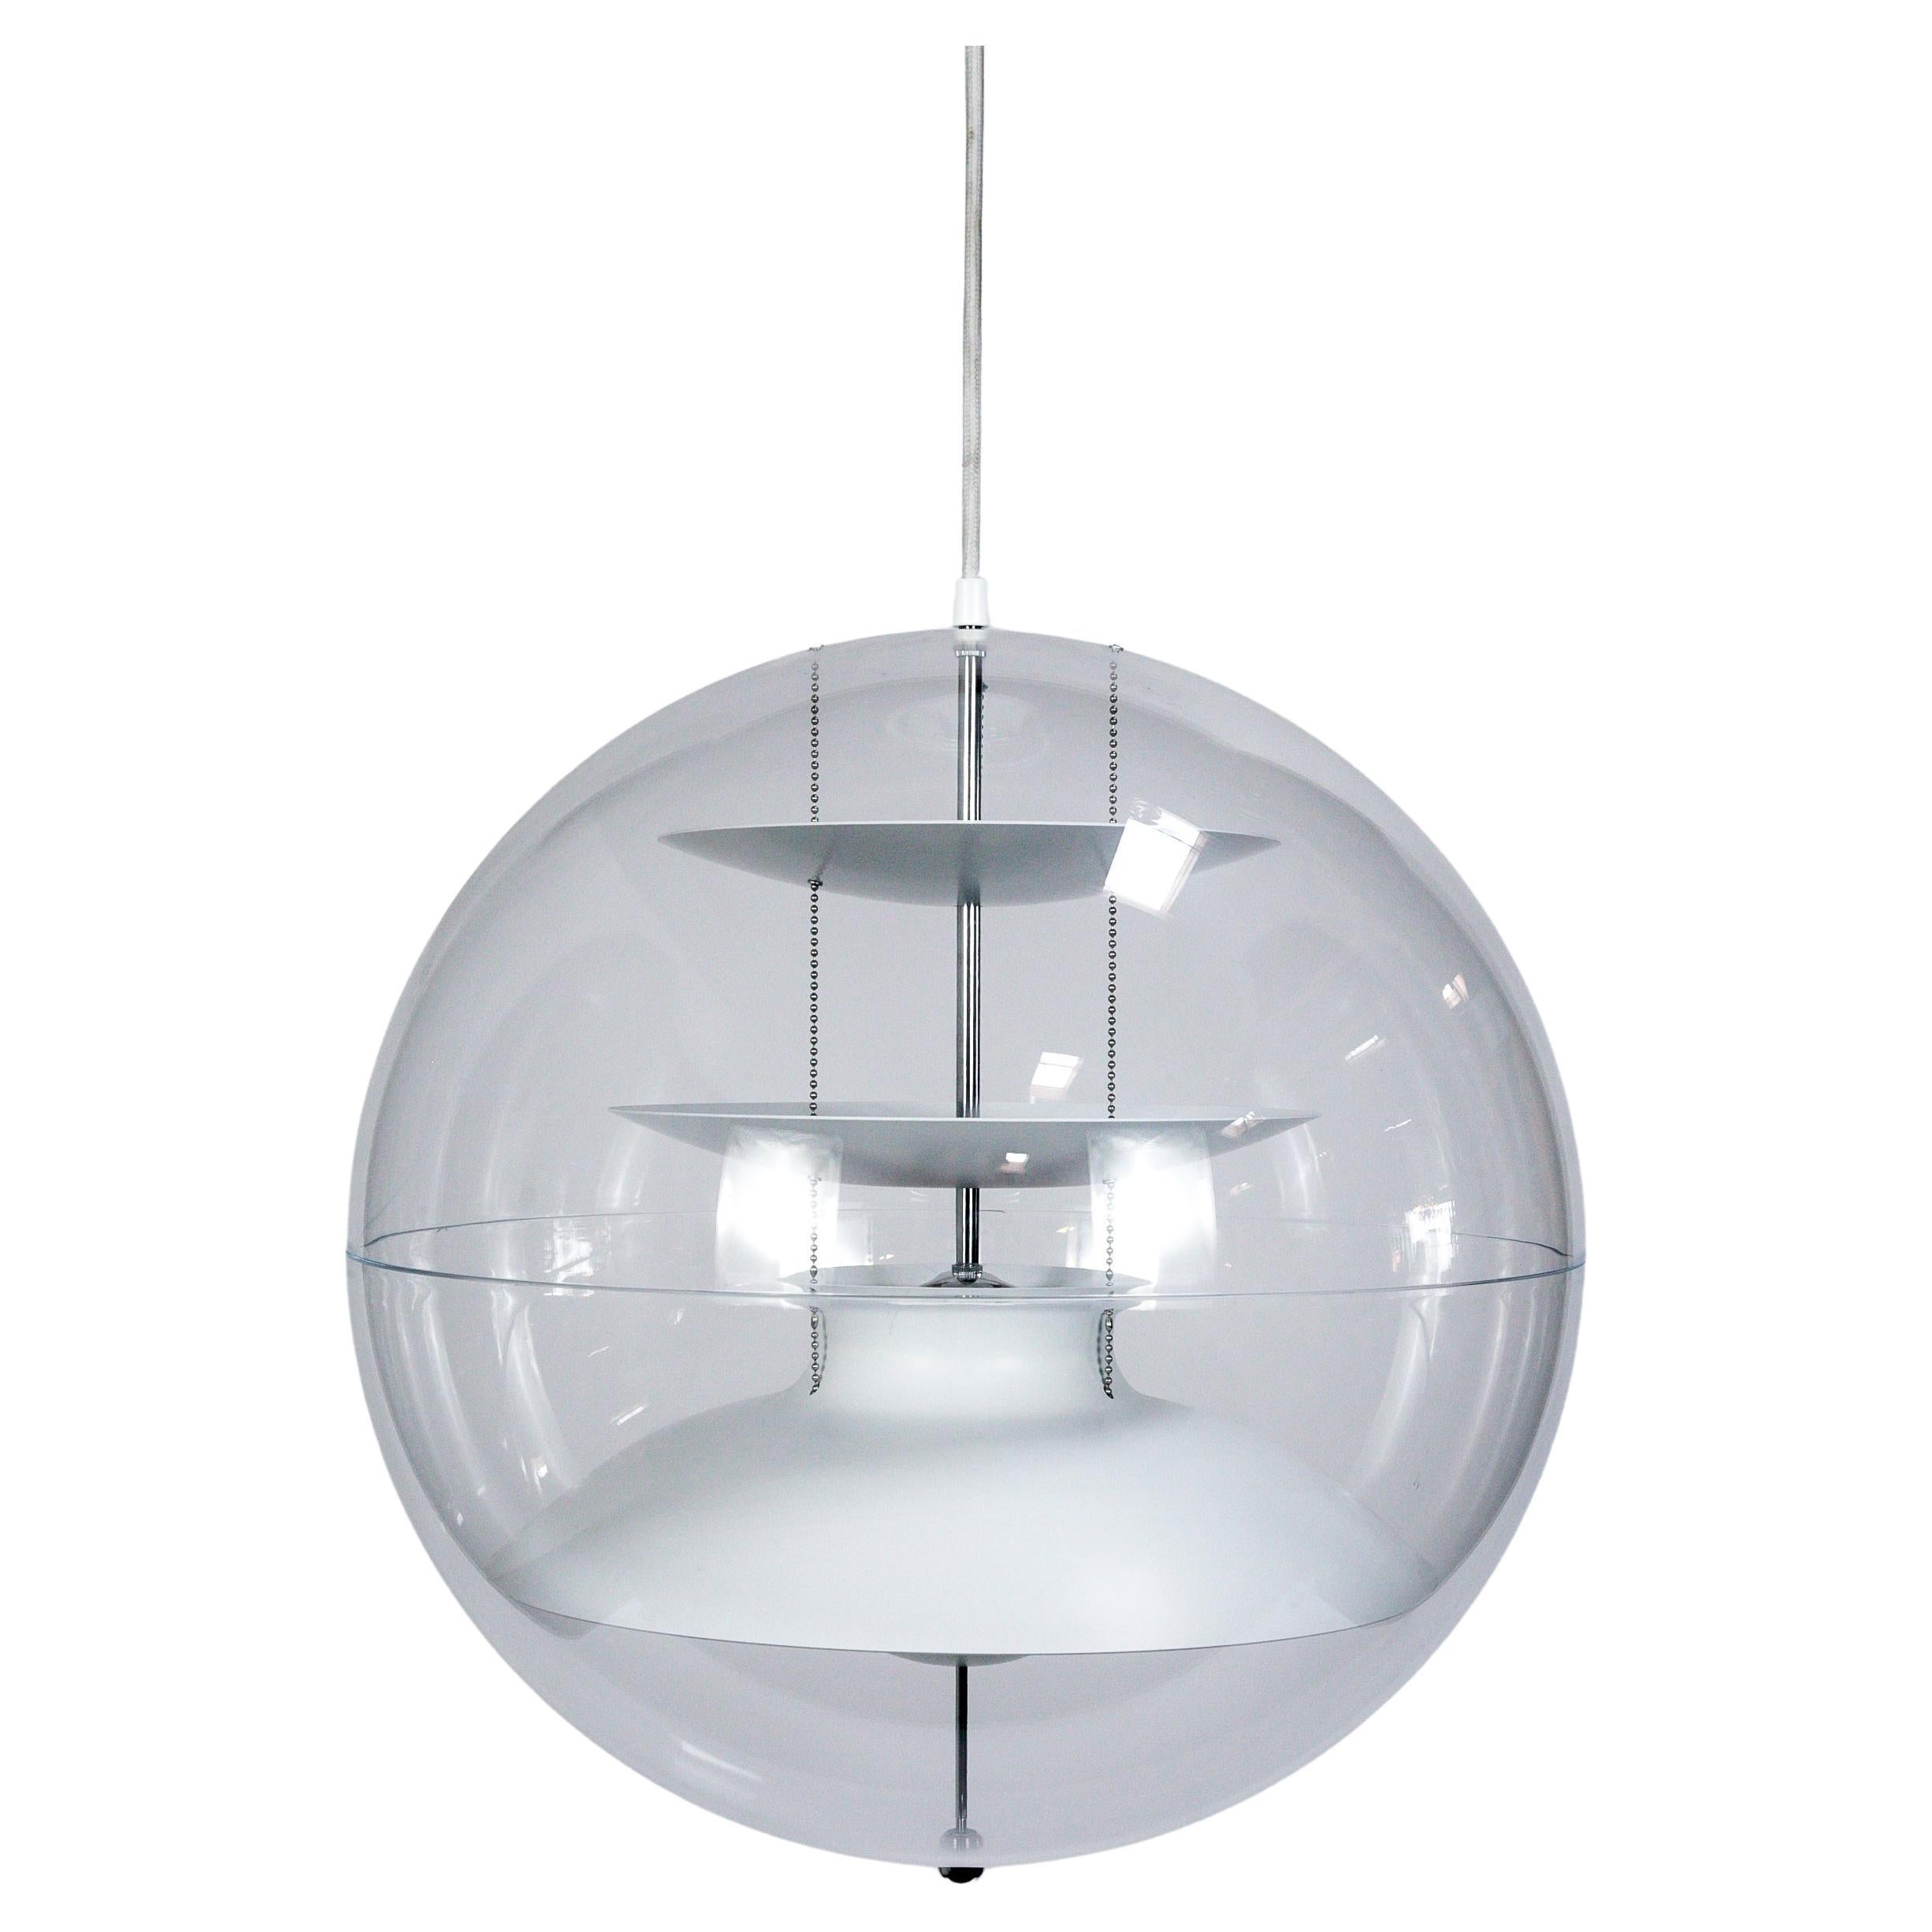 Verner Panton "Panto Lamp" Hanging Sphere Light For Sale